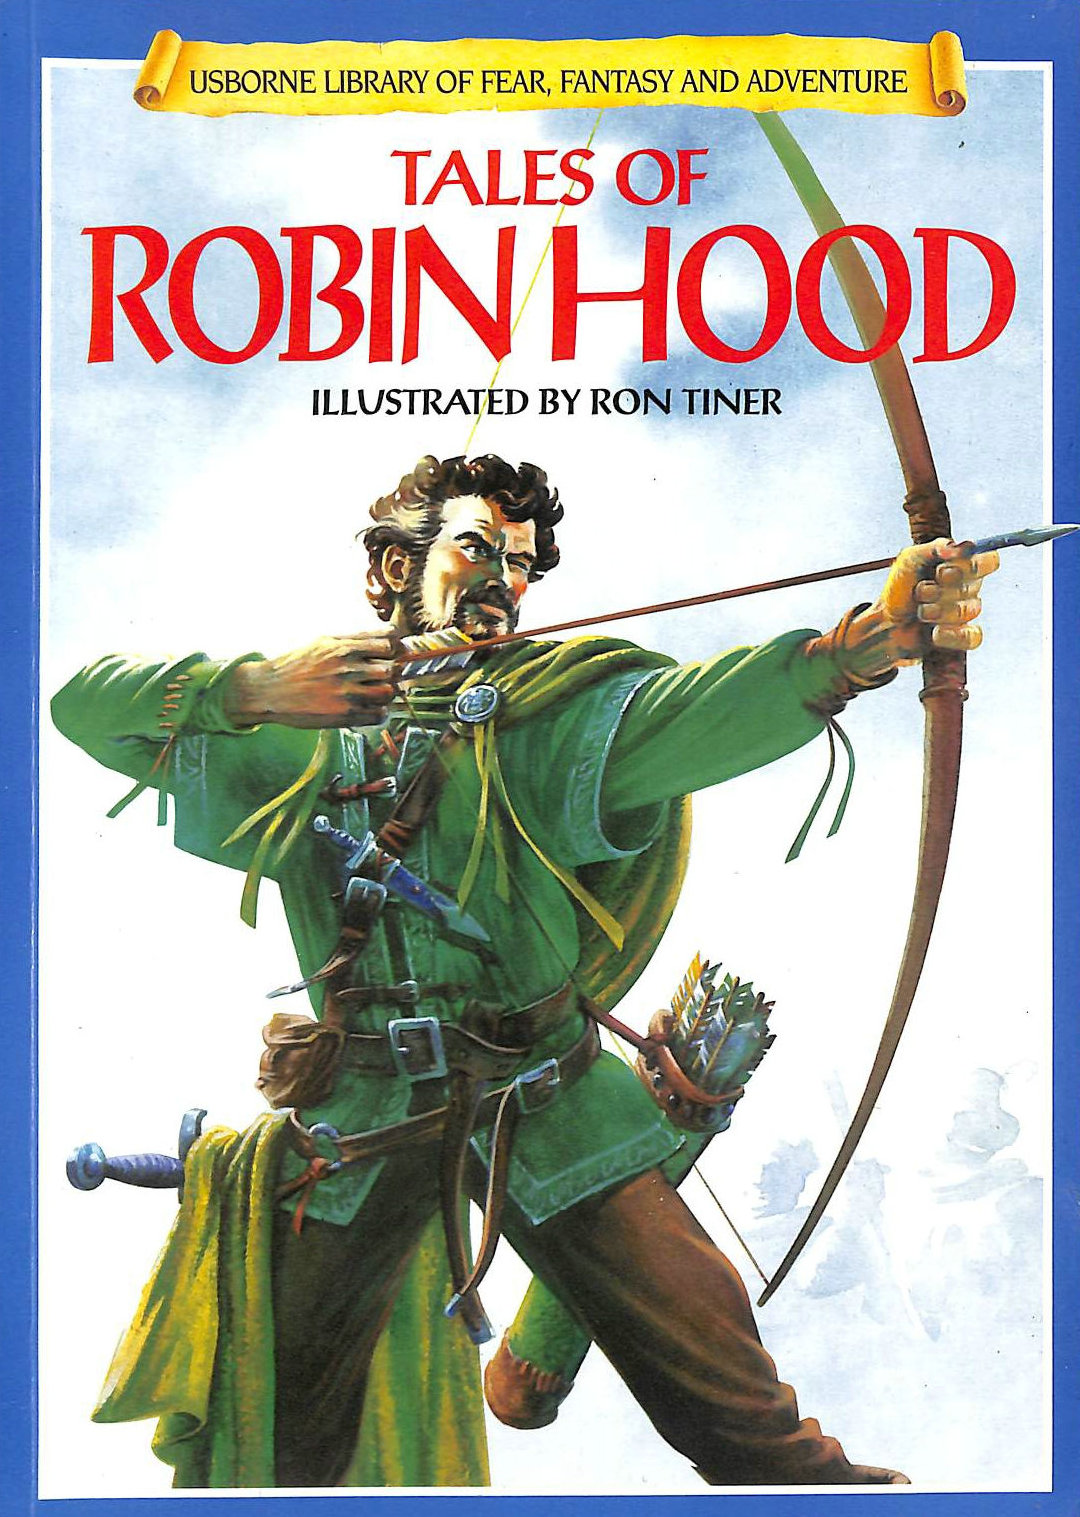 ALLAN, TONY - Tales of Robin Hood (Usborne Library of Fear, Fantasy and Adventure S.)